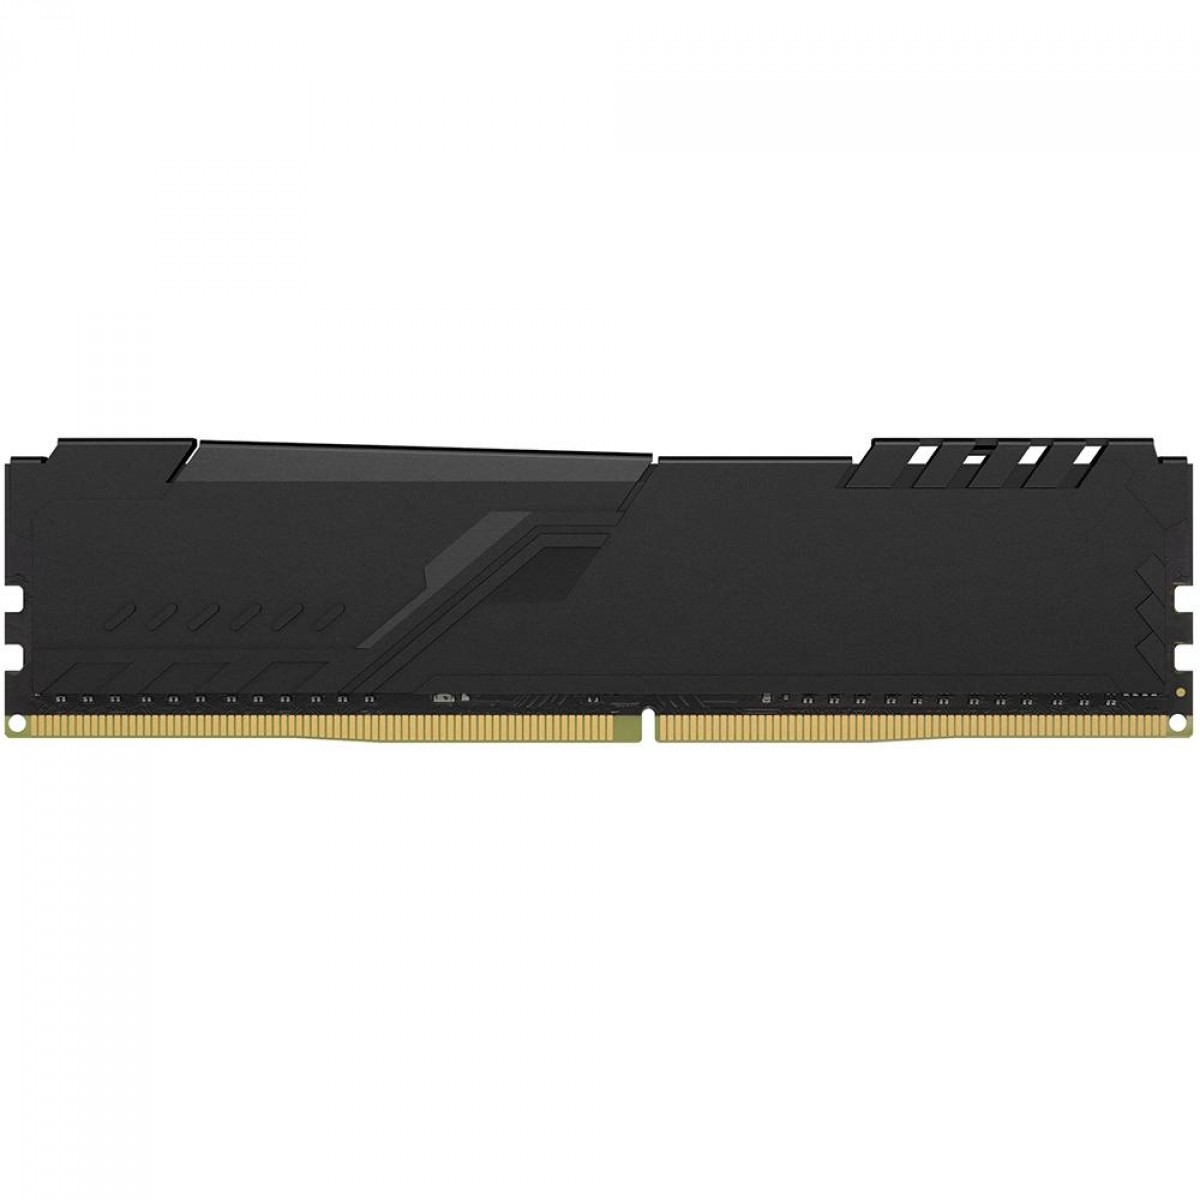 Memória DDR4 HyperX Fury, 16GB (2x8GB), 2400MHz, Black, HX424C15FB3K2/16